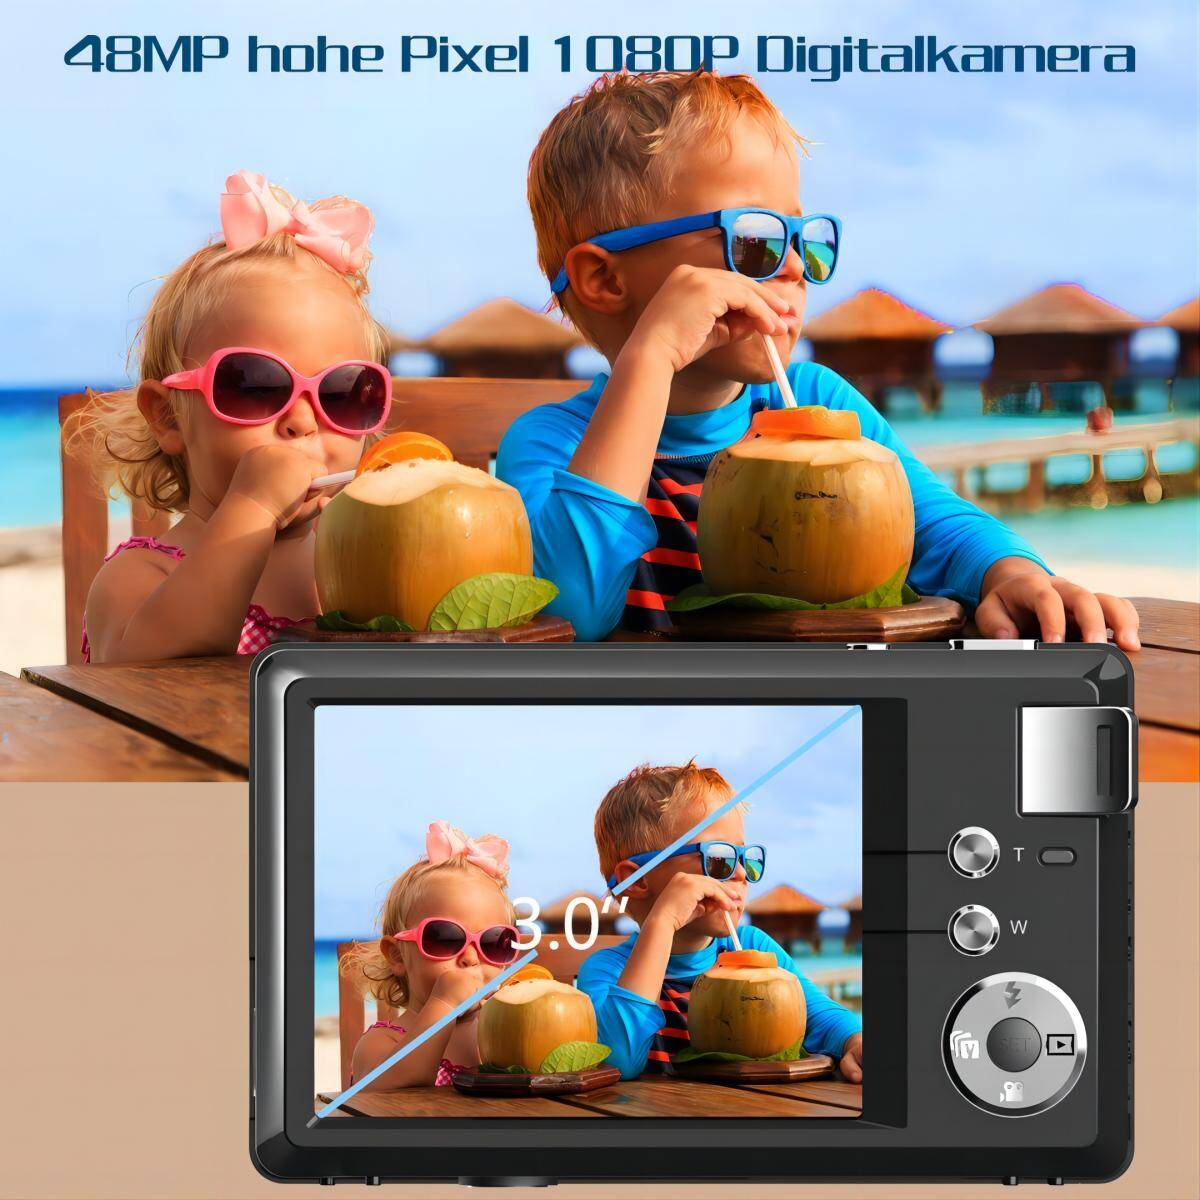 LINGDA 4K Schwarz- Kamera 48MP Digital